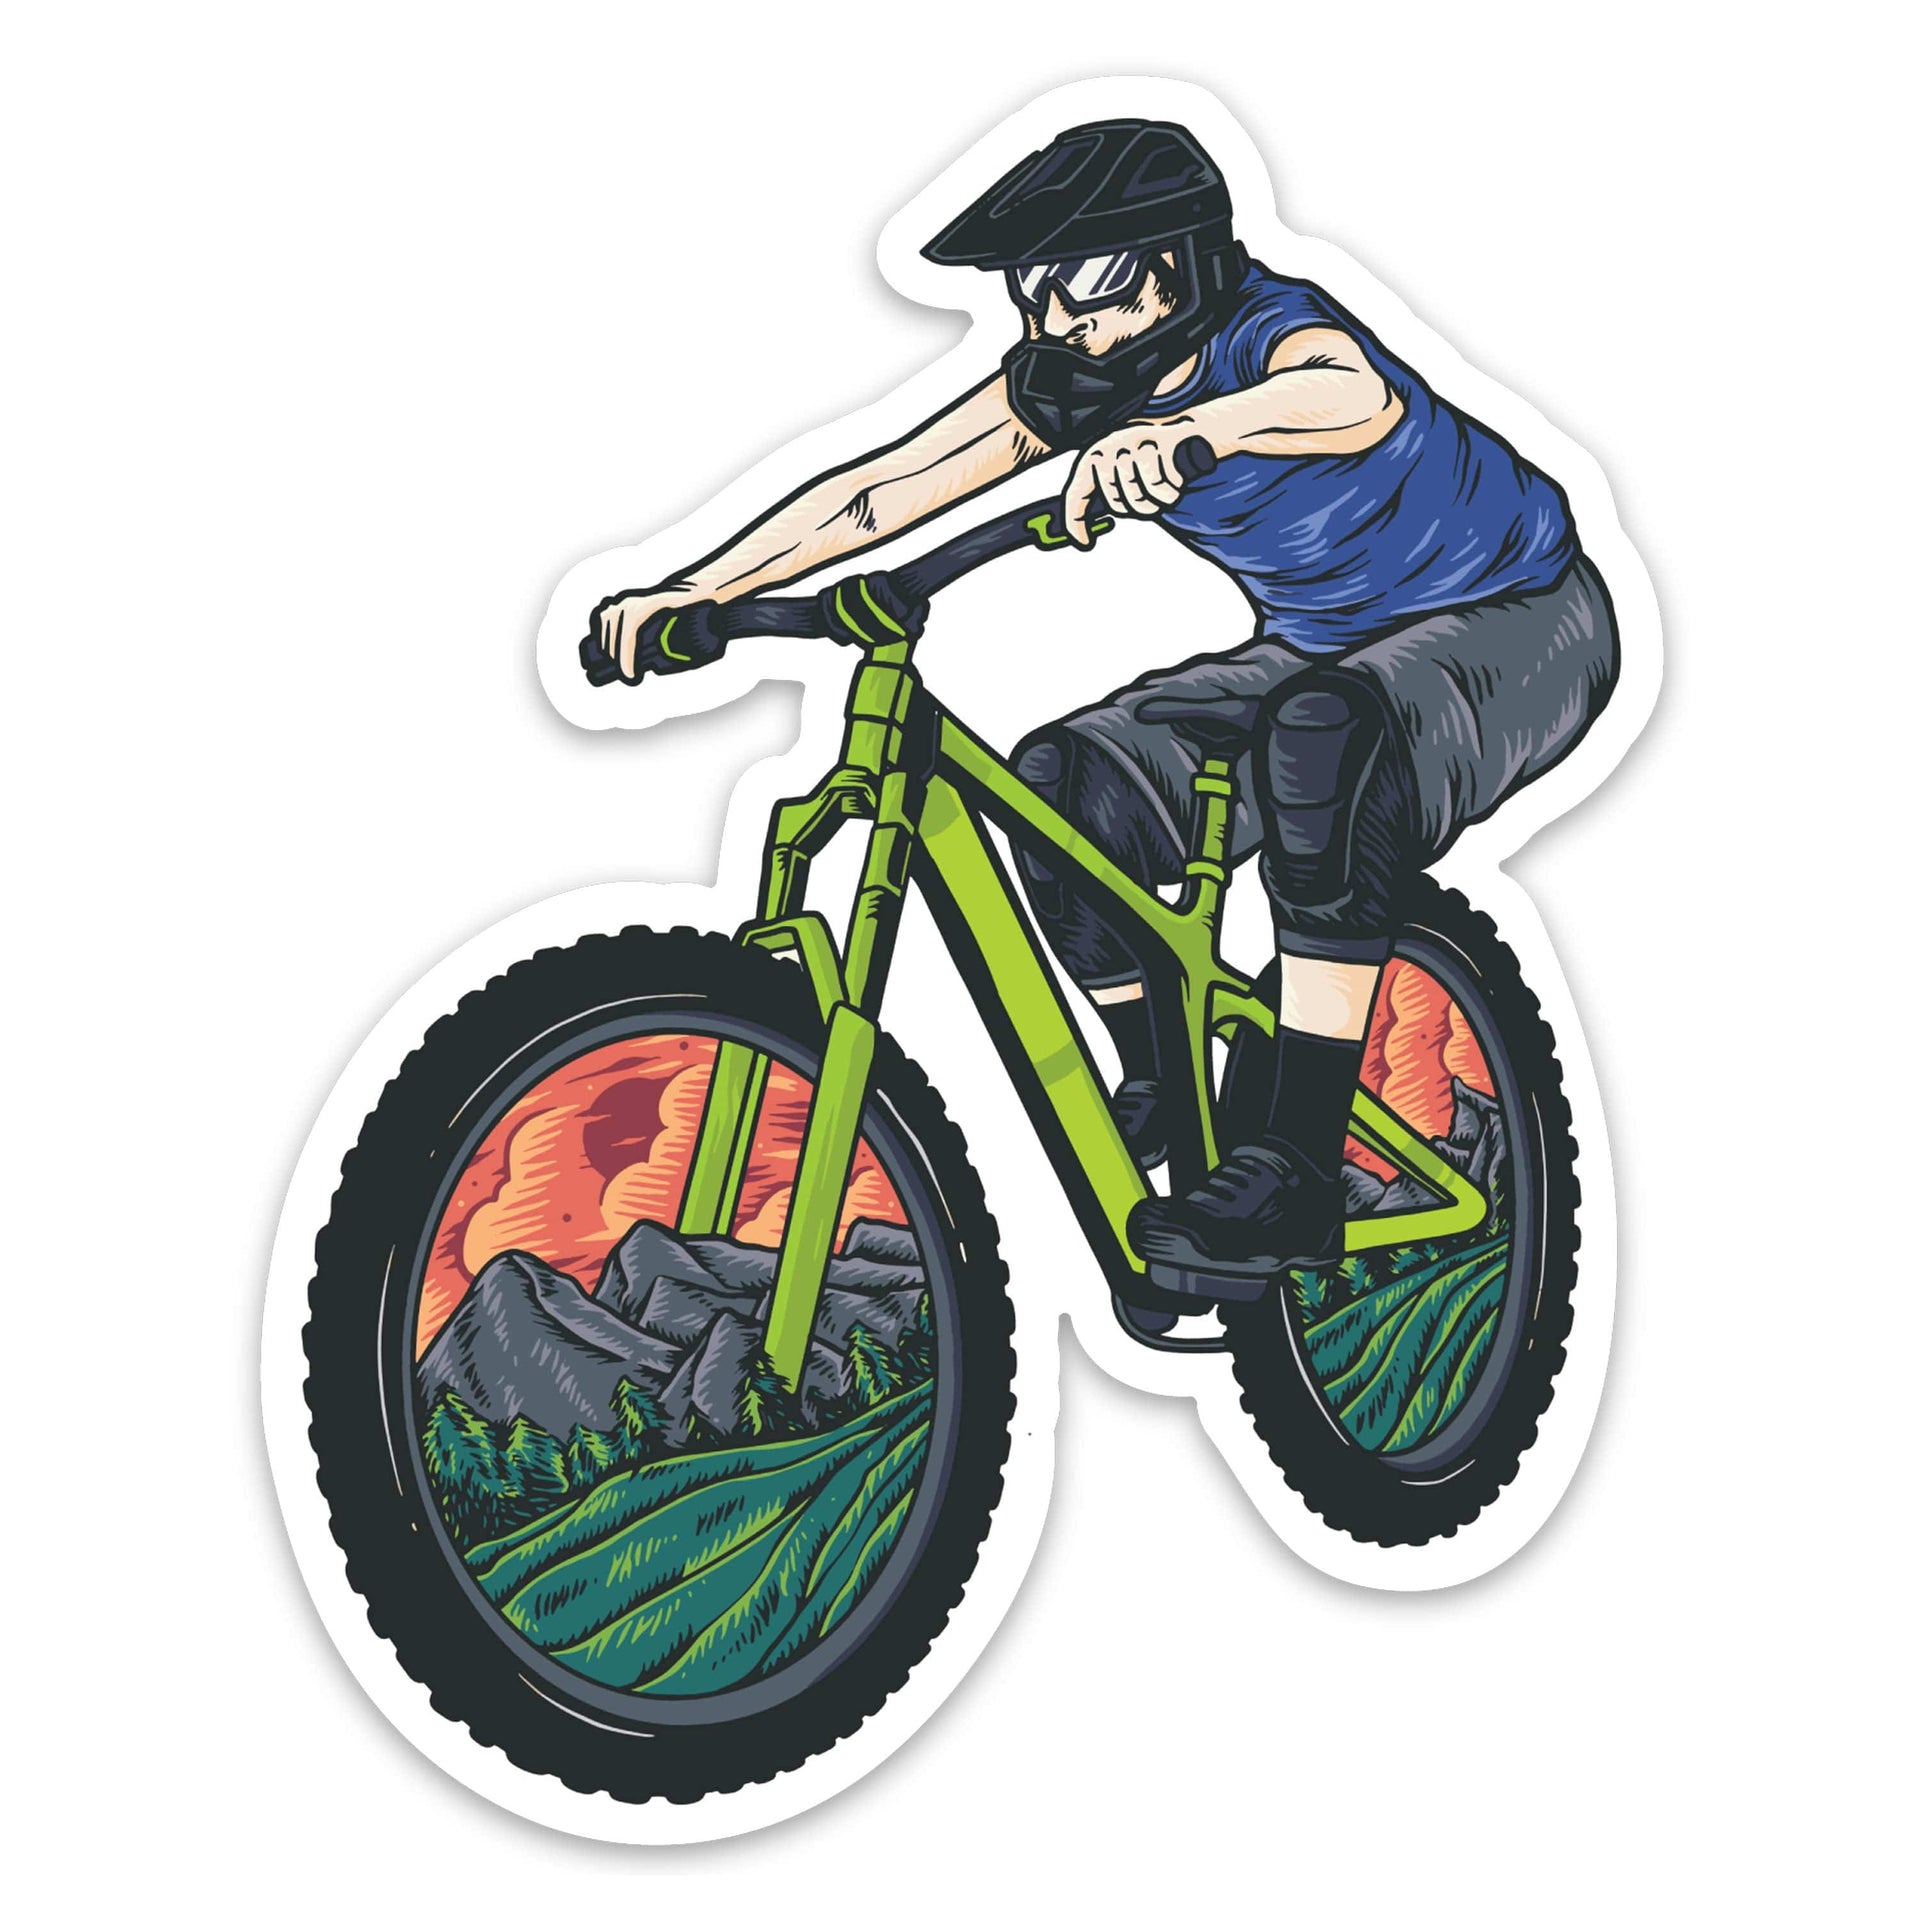 Melon Bike Stickers, Bike Stickers, Bicycle Stickers, Bicycle